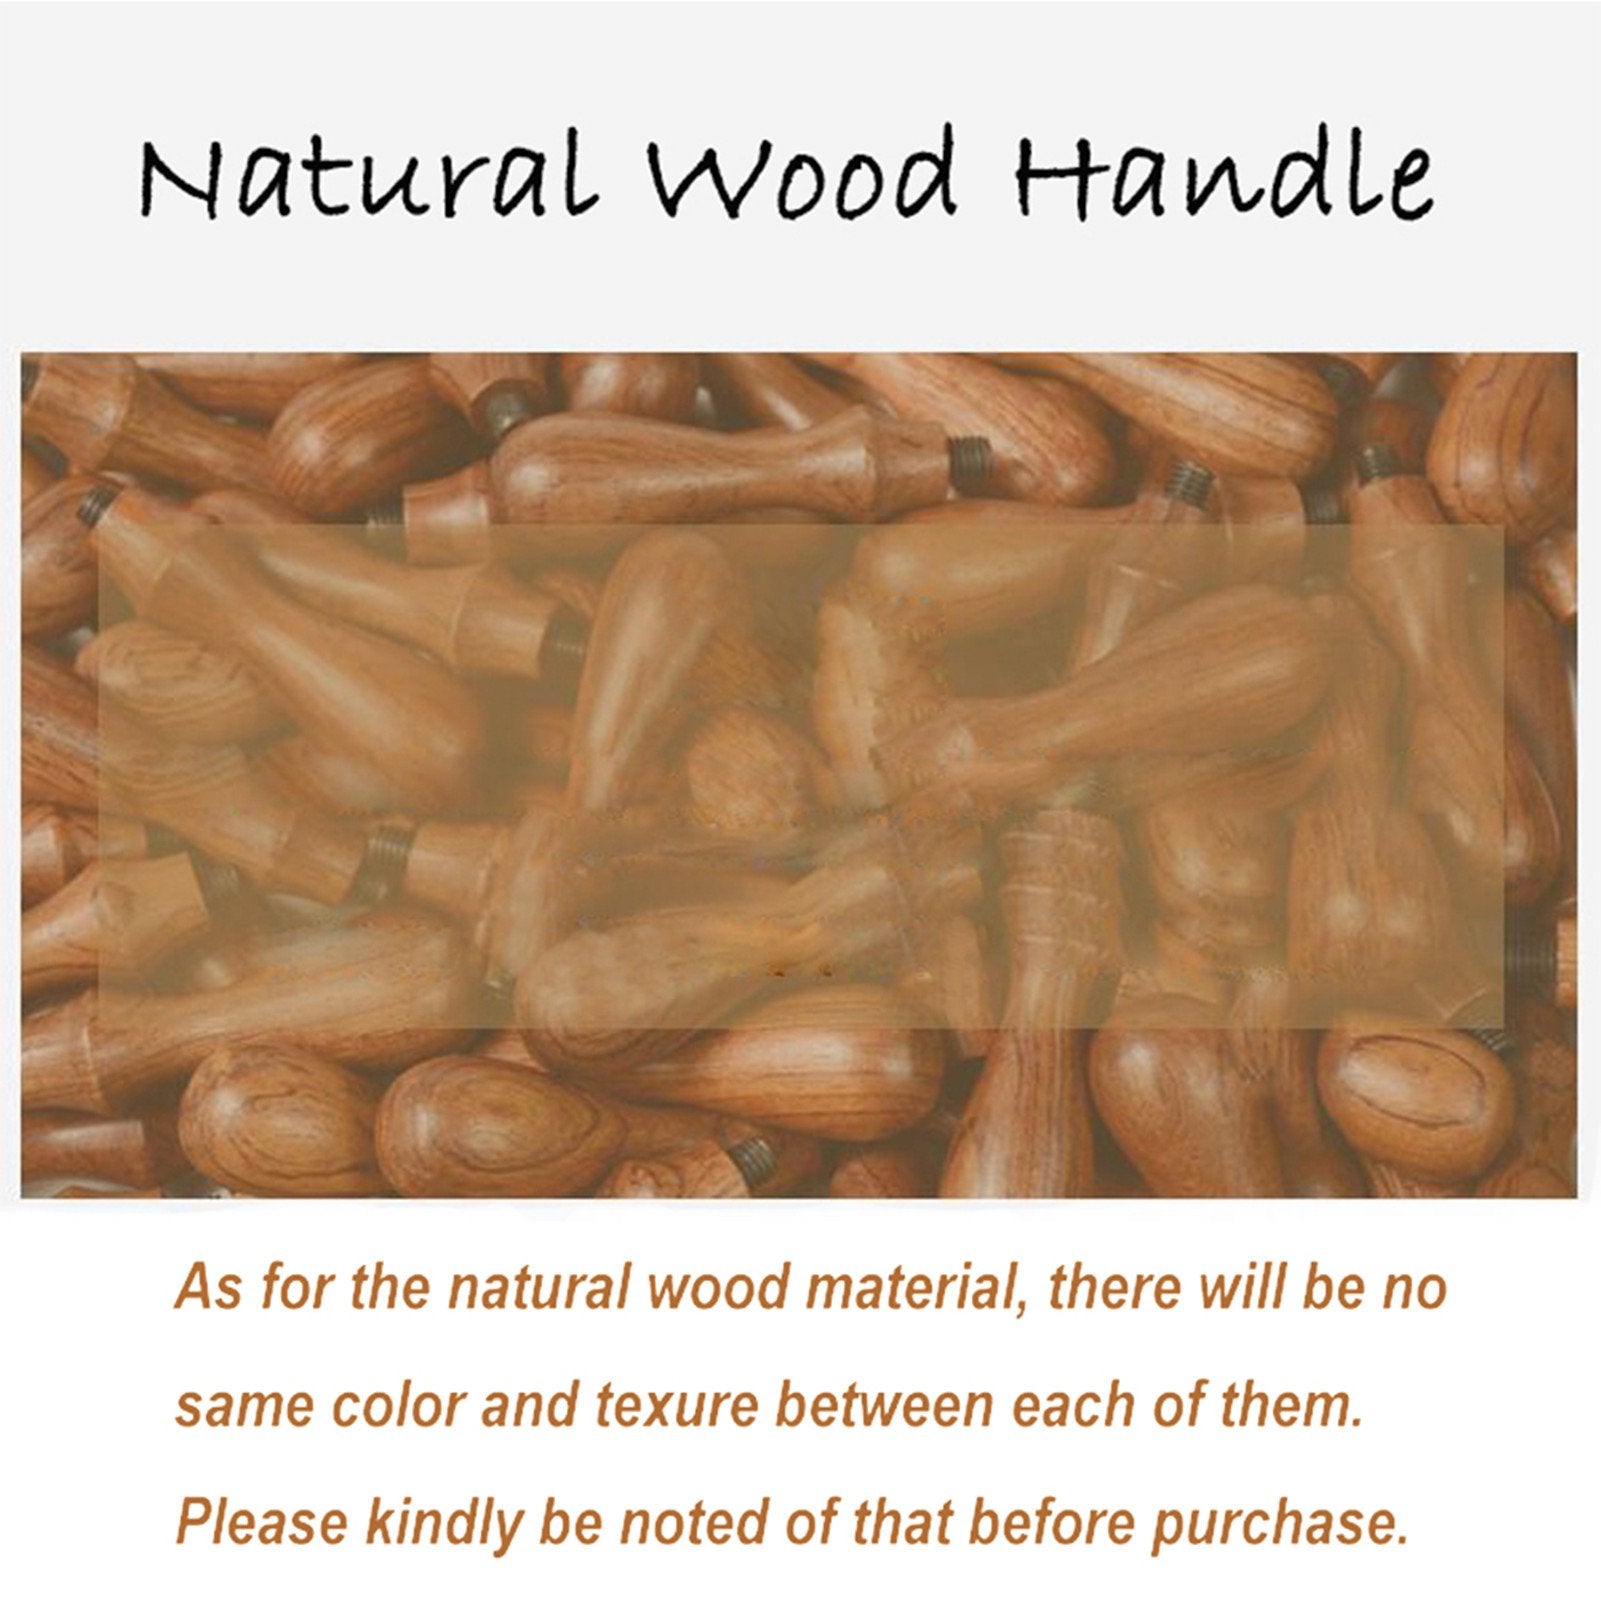 Wild Mushrooms Wood Handle Wax Seal Stamp